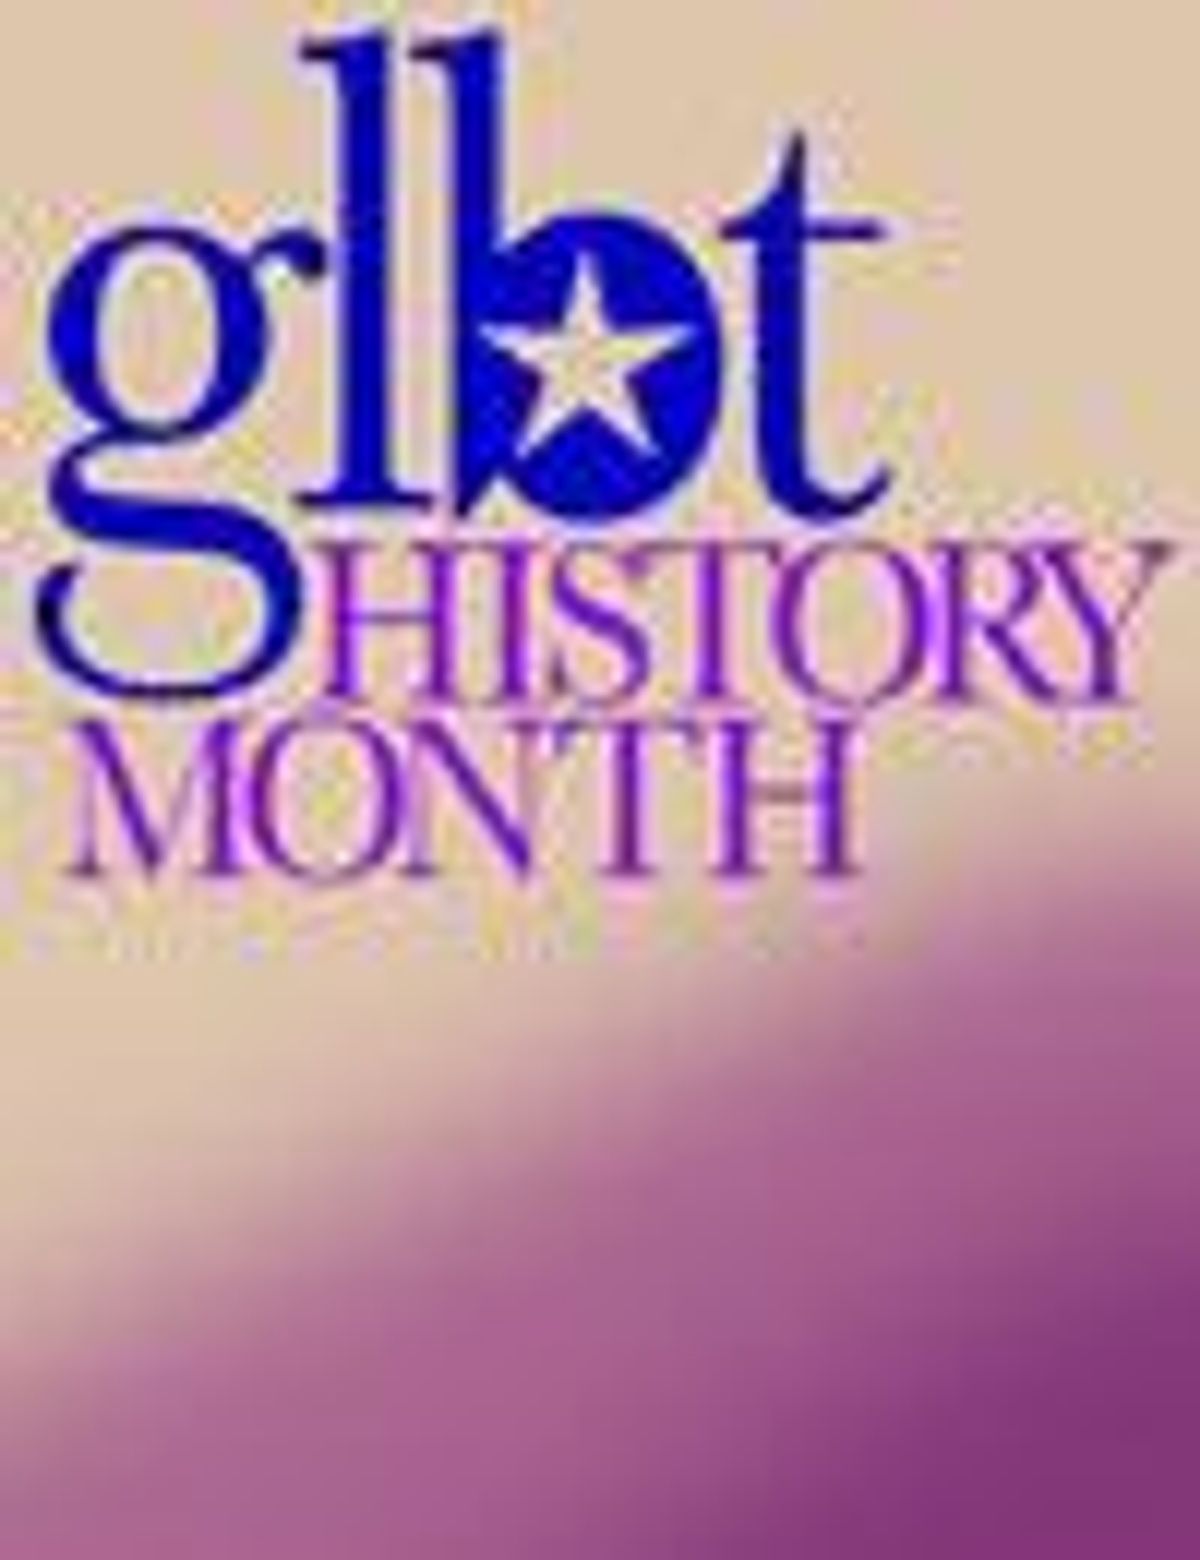 Glbt_historymonth